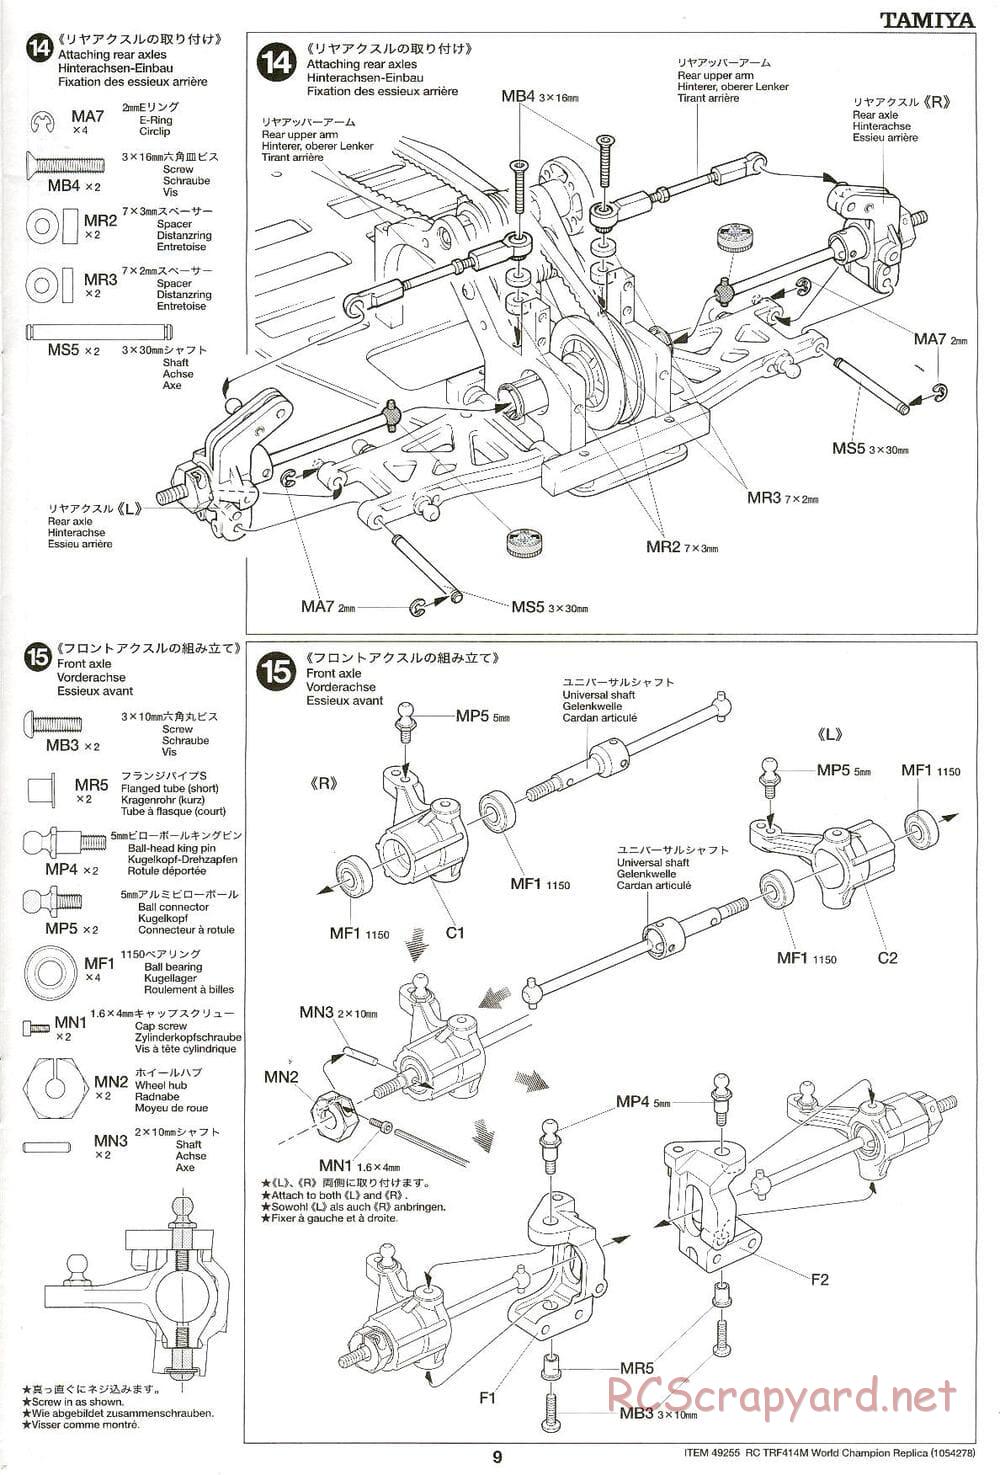 Tamiya - TRF414M World Champion Replica Chassis - Manual - Page 9